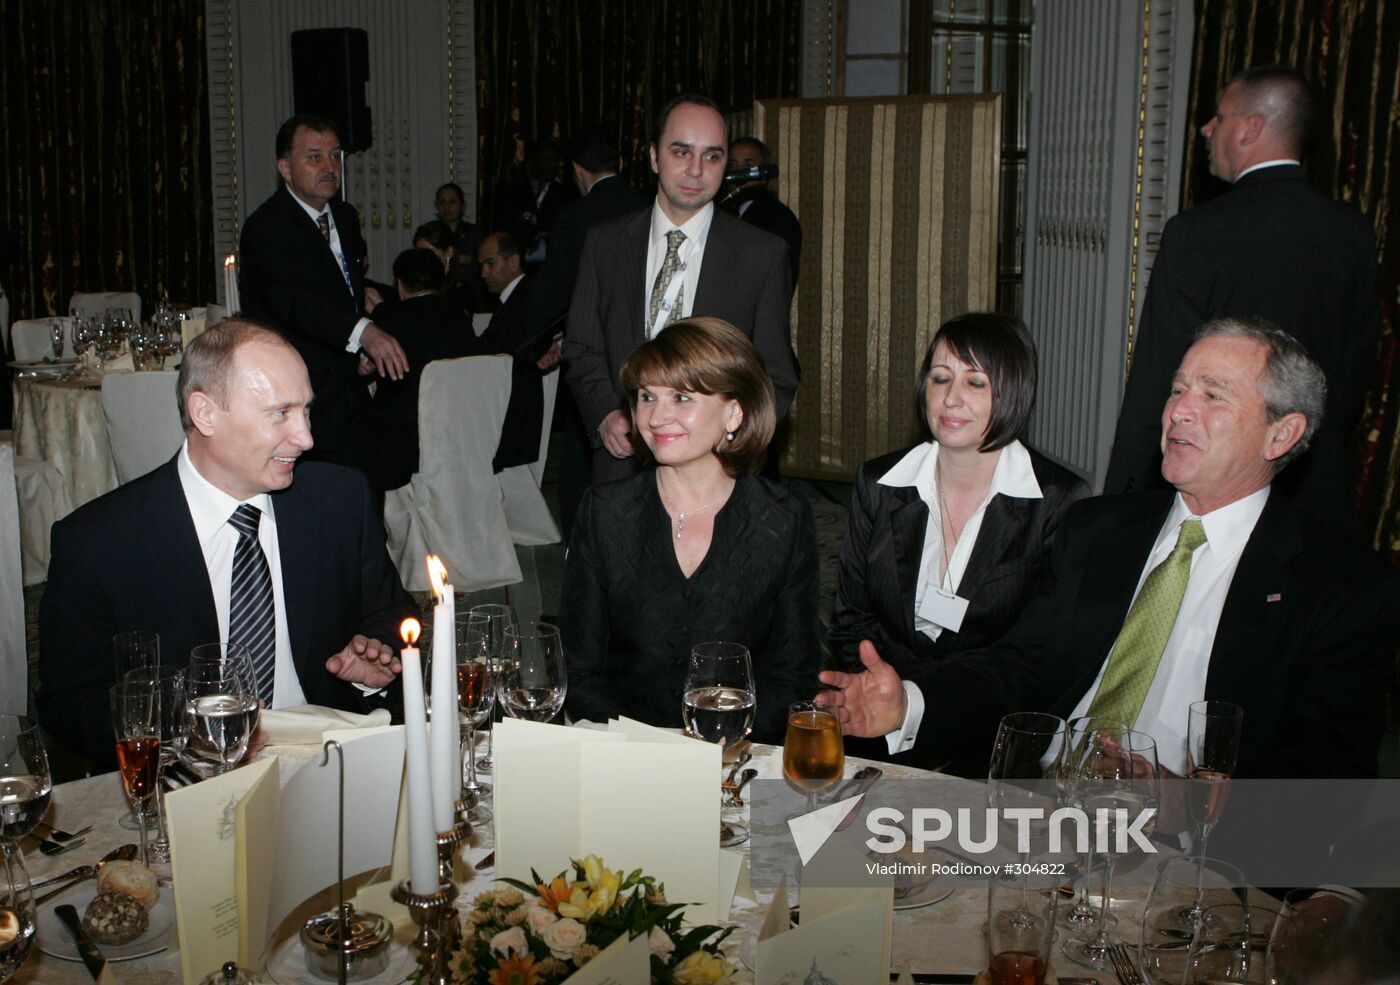 Vladimir Putin and George W. Bush in Bucharest